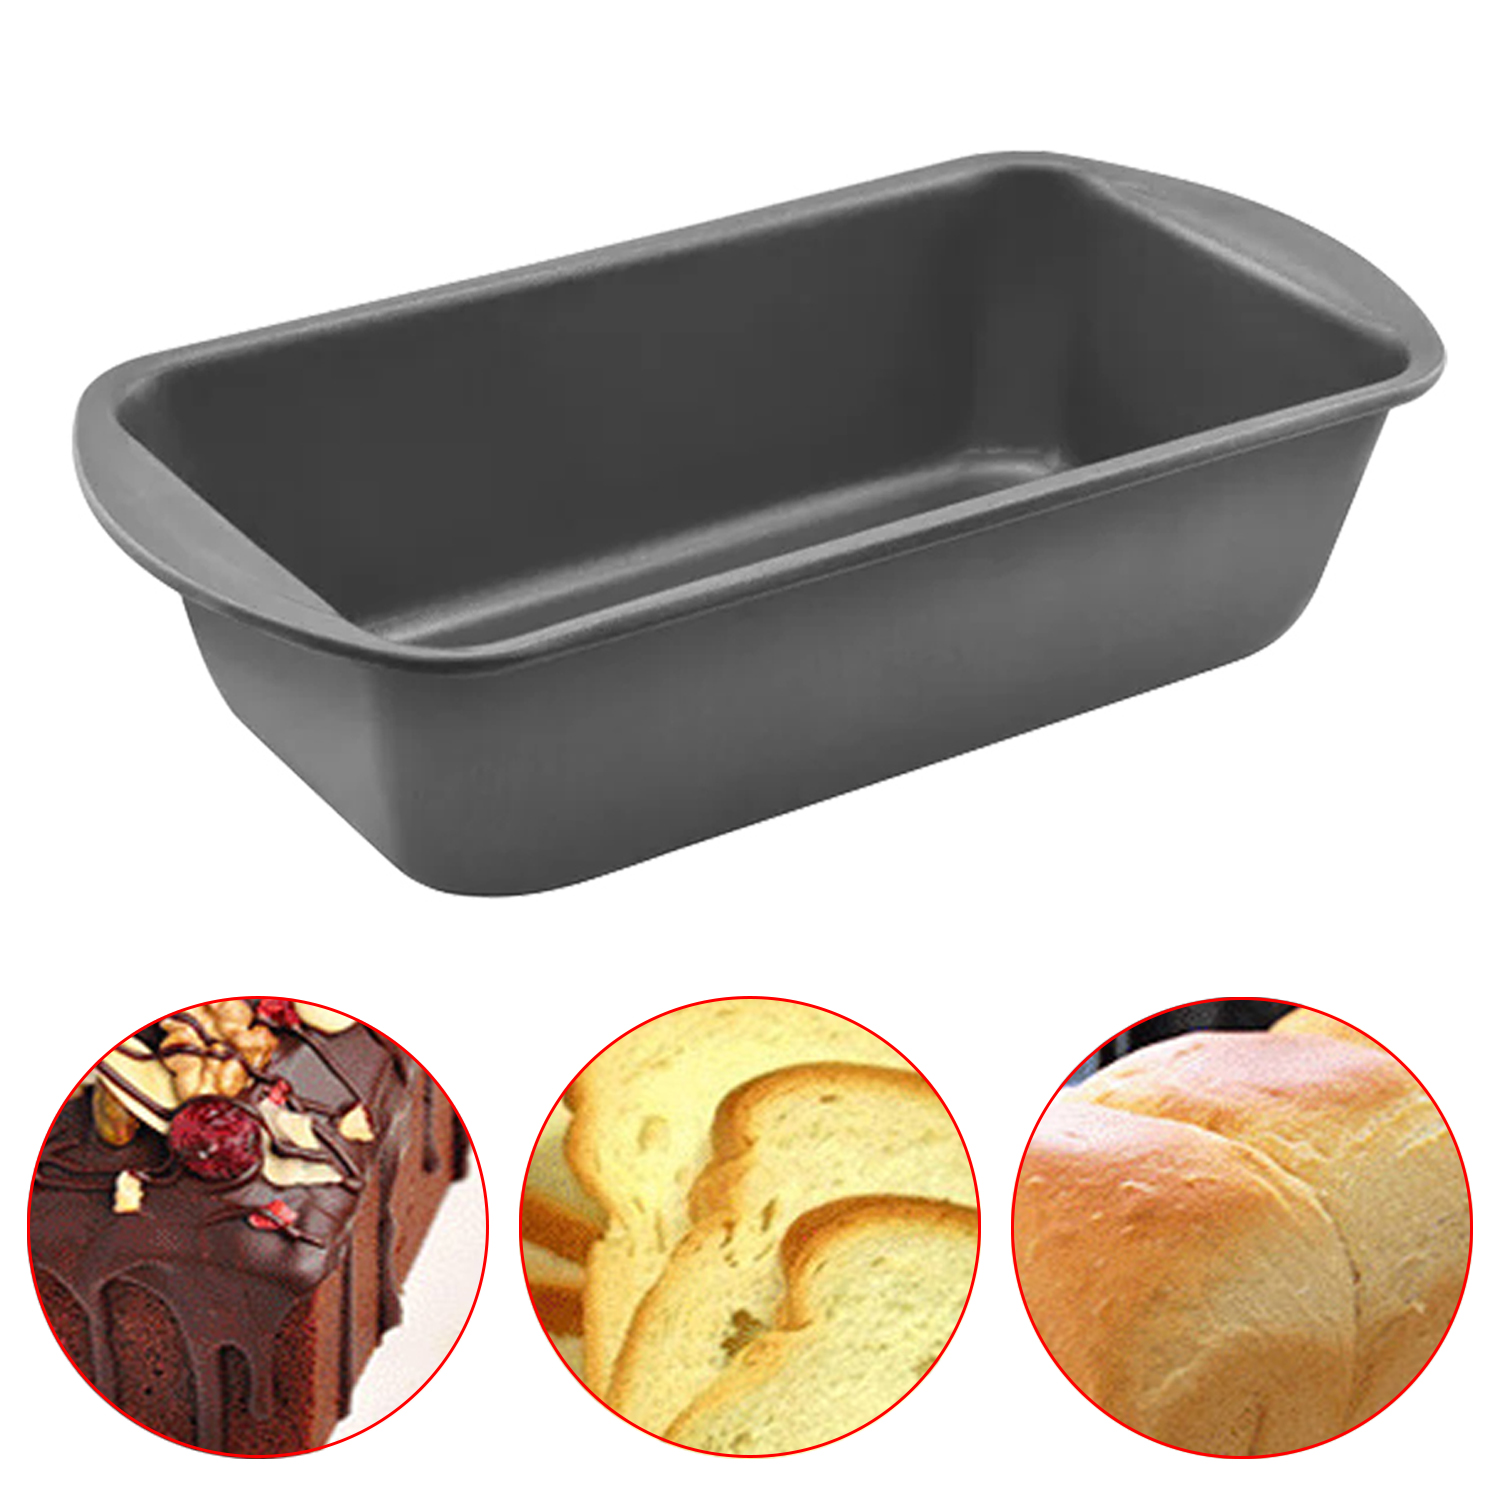 1 molde para Pan rectangular, molde para Pan tostado, molde para pastel, molde para Pan de acero al carbono, utensilios para hornear, herramienta rectangular antiadherente